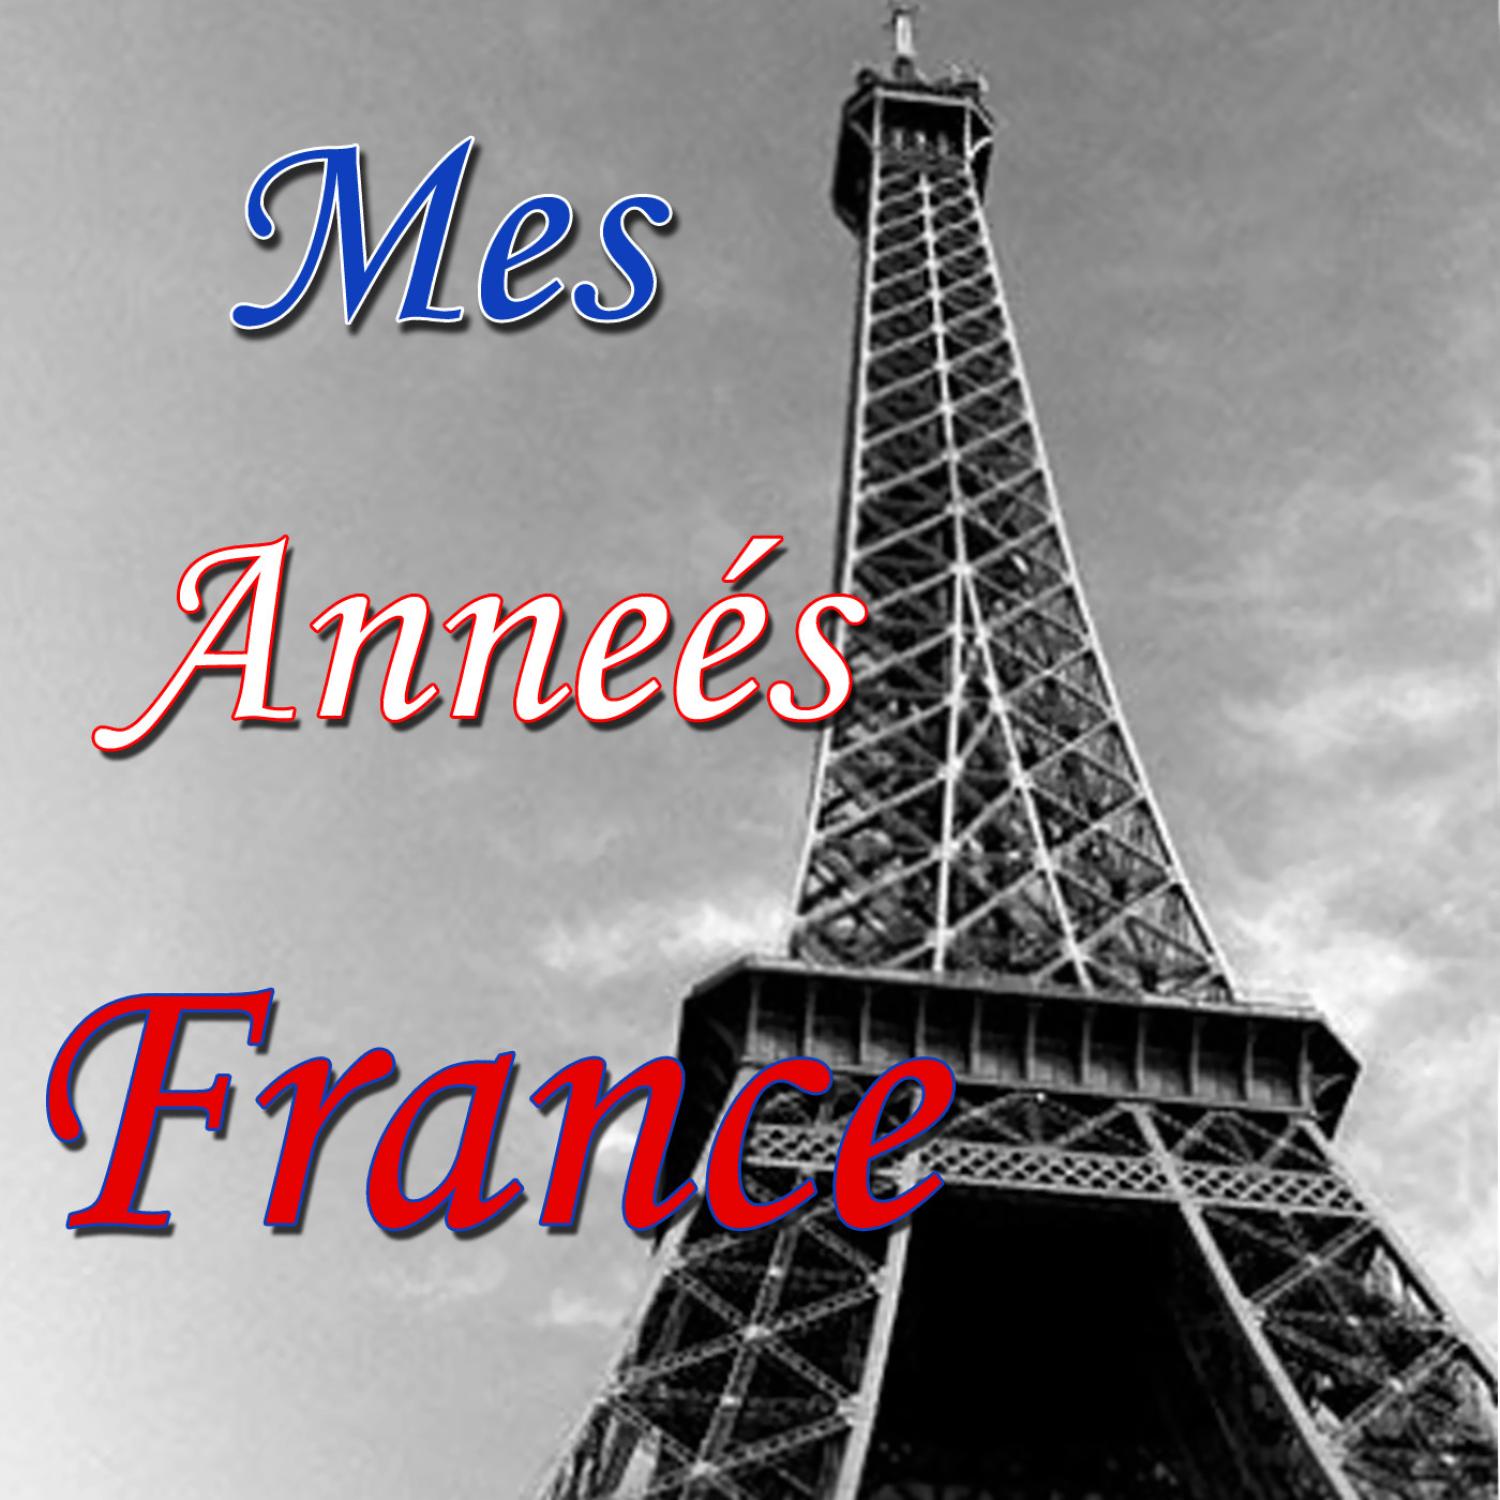 Mes annees France